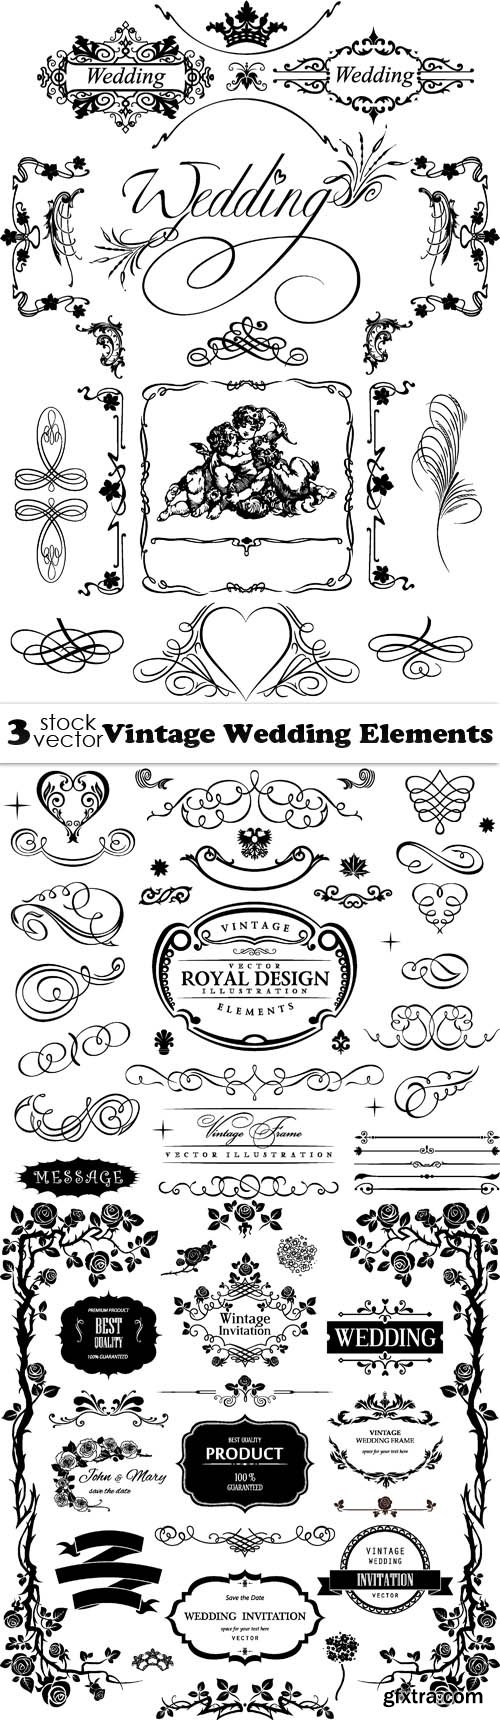 Vectors - Vintage Wedding Elements